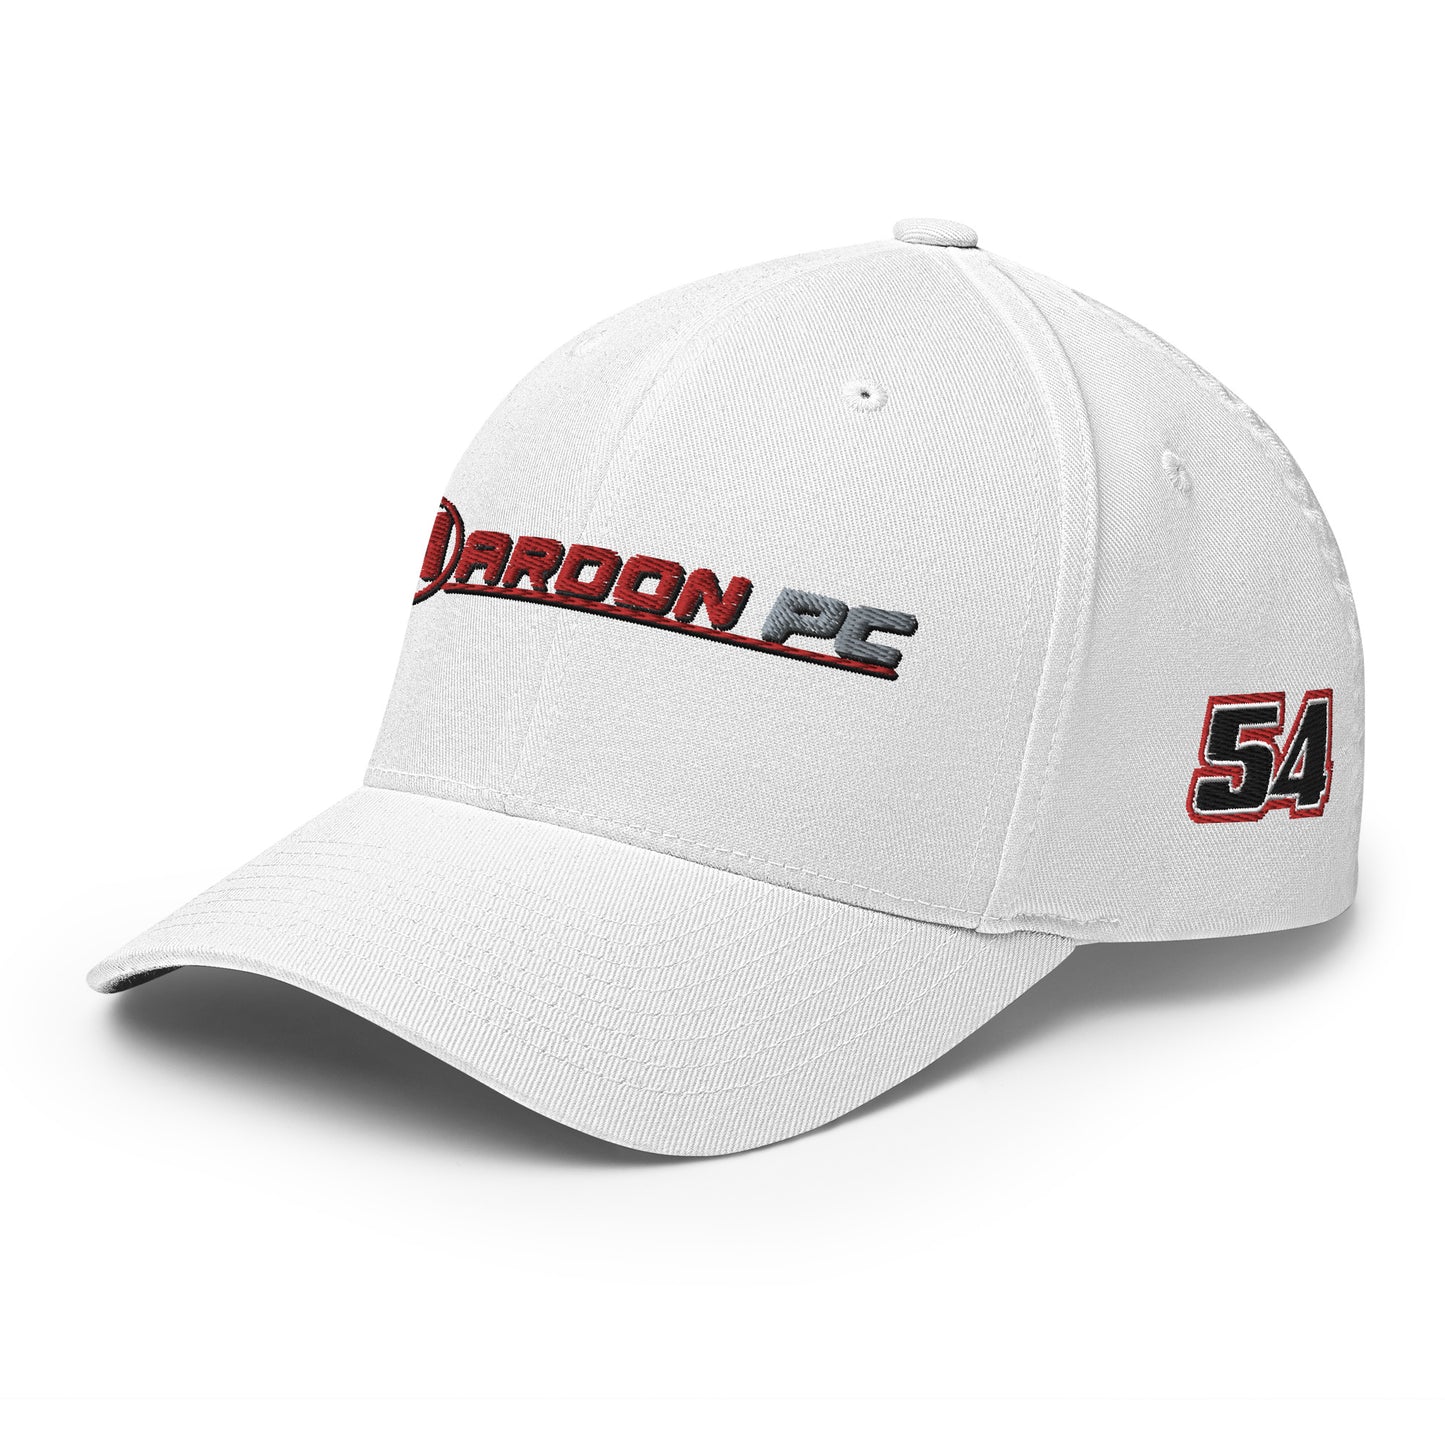 MARDON PC 54 Hat